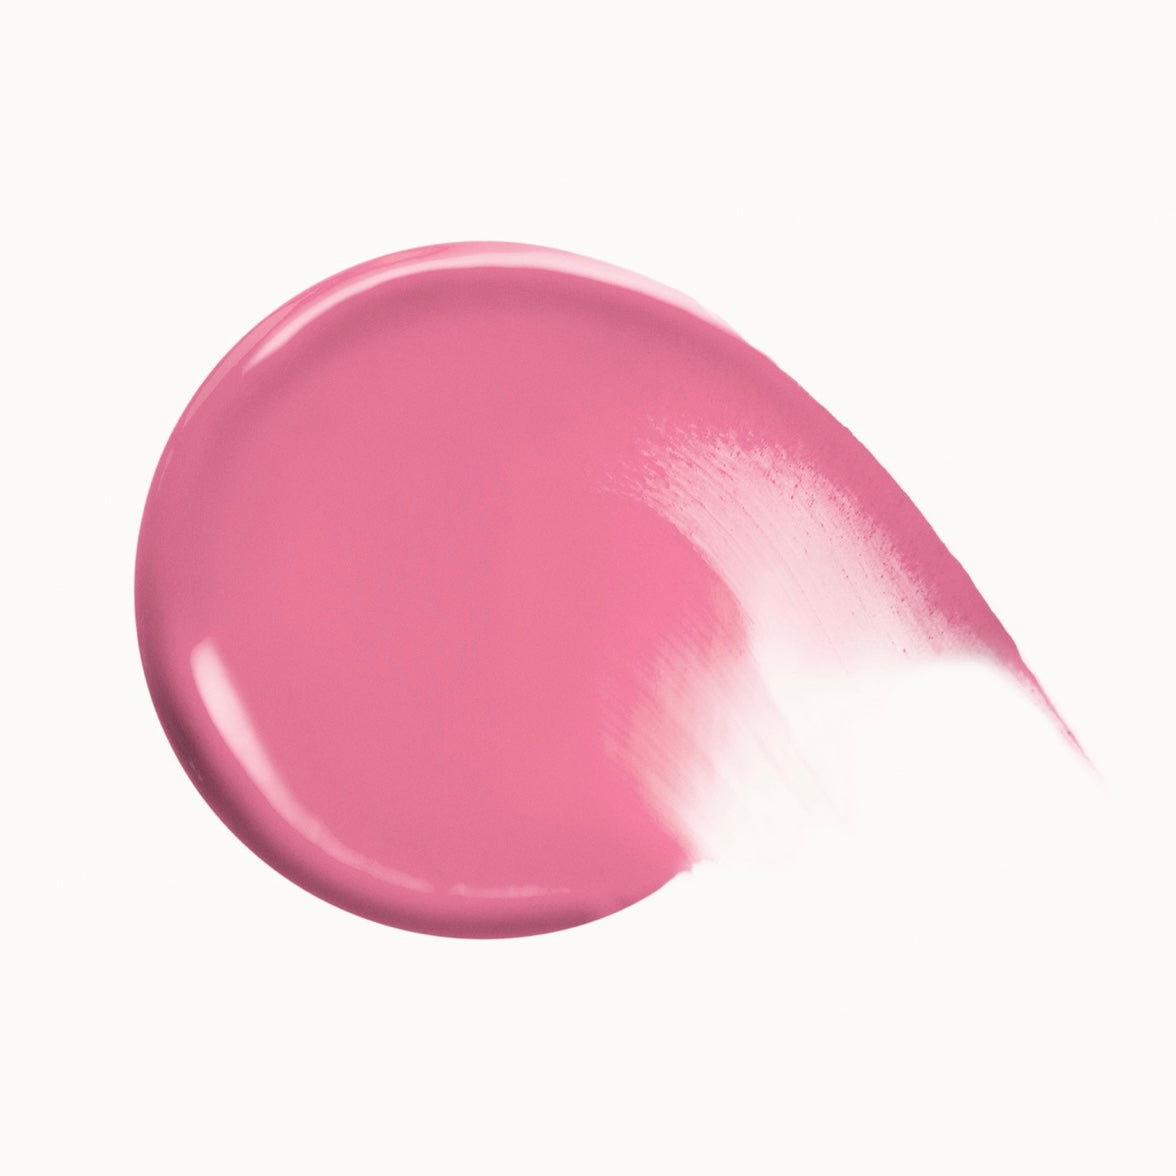 RARE BEAUTY - Soft Pinch Liquid Blush